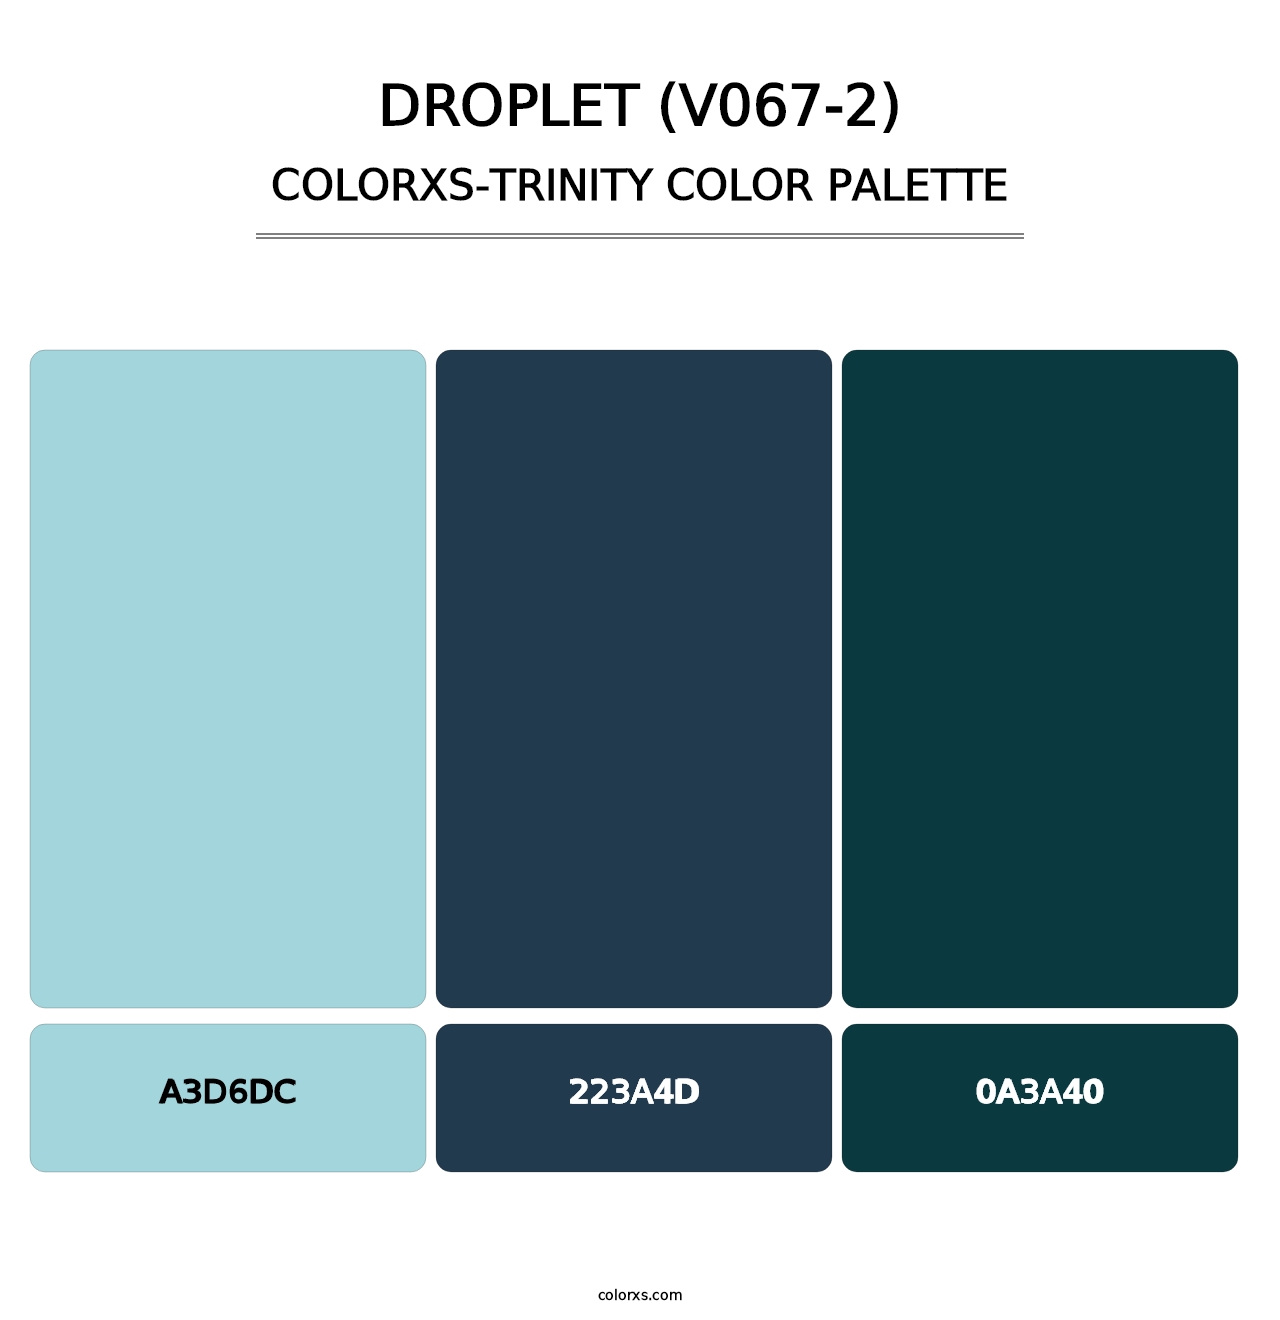 Droplet (V067-2) - Colorxs Trinity Palette